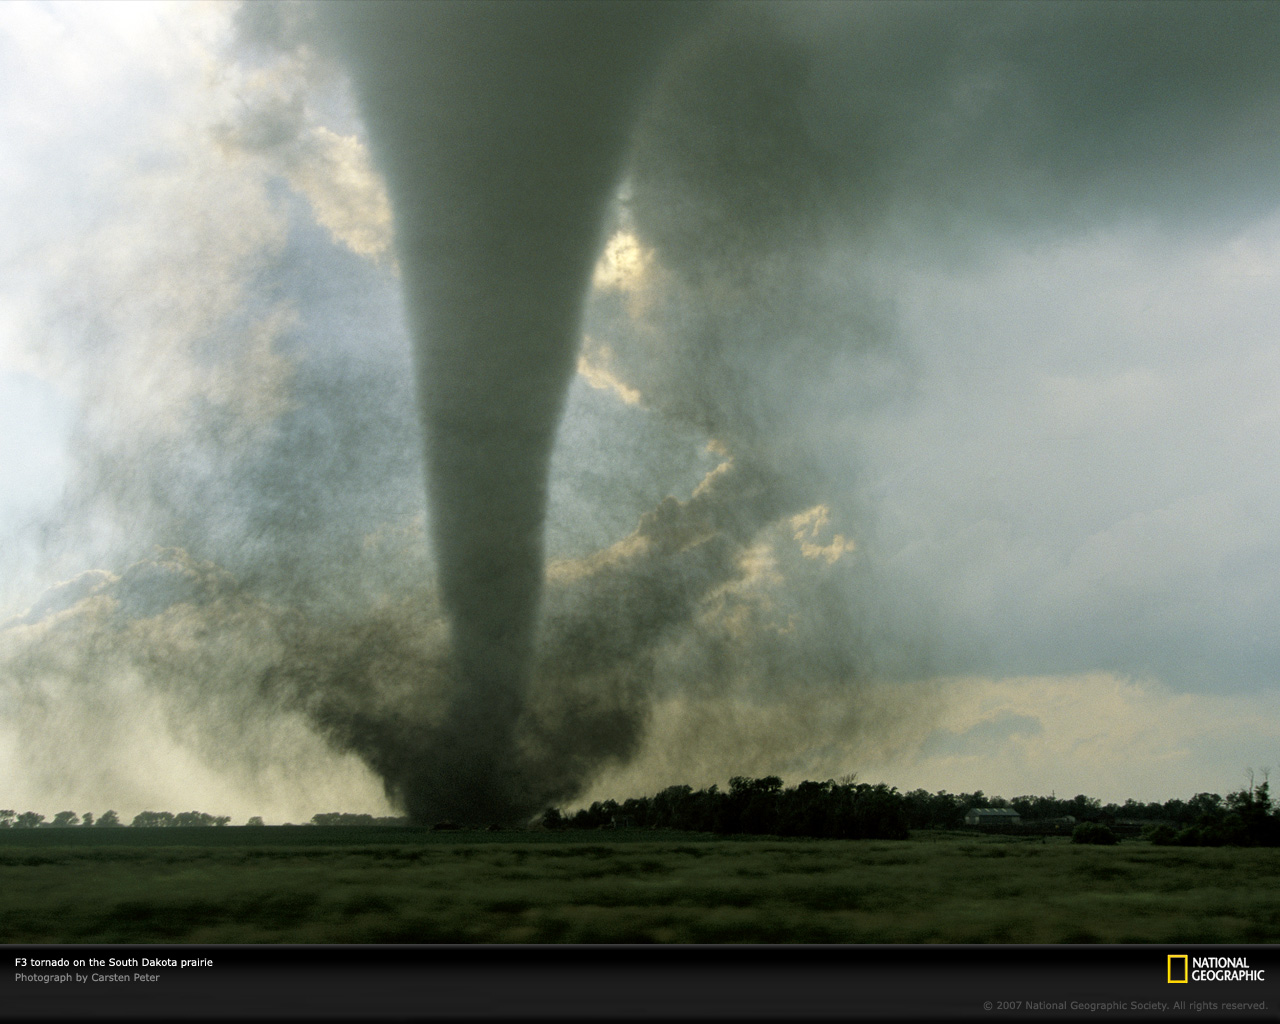 south-dakota-tornado-749001-xl.jpg